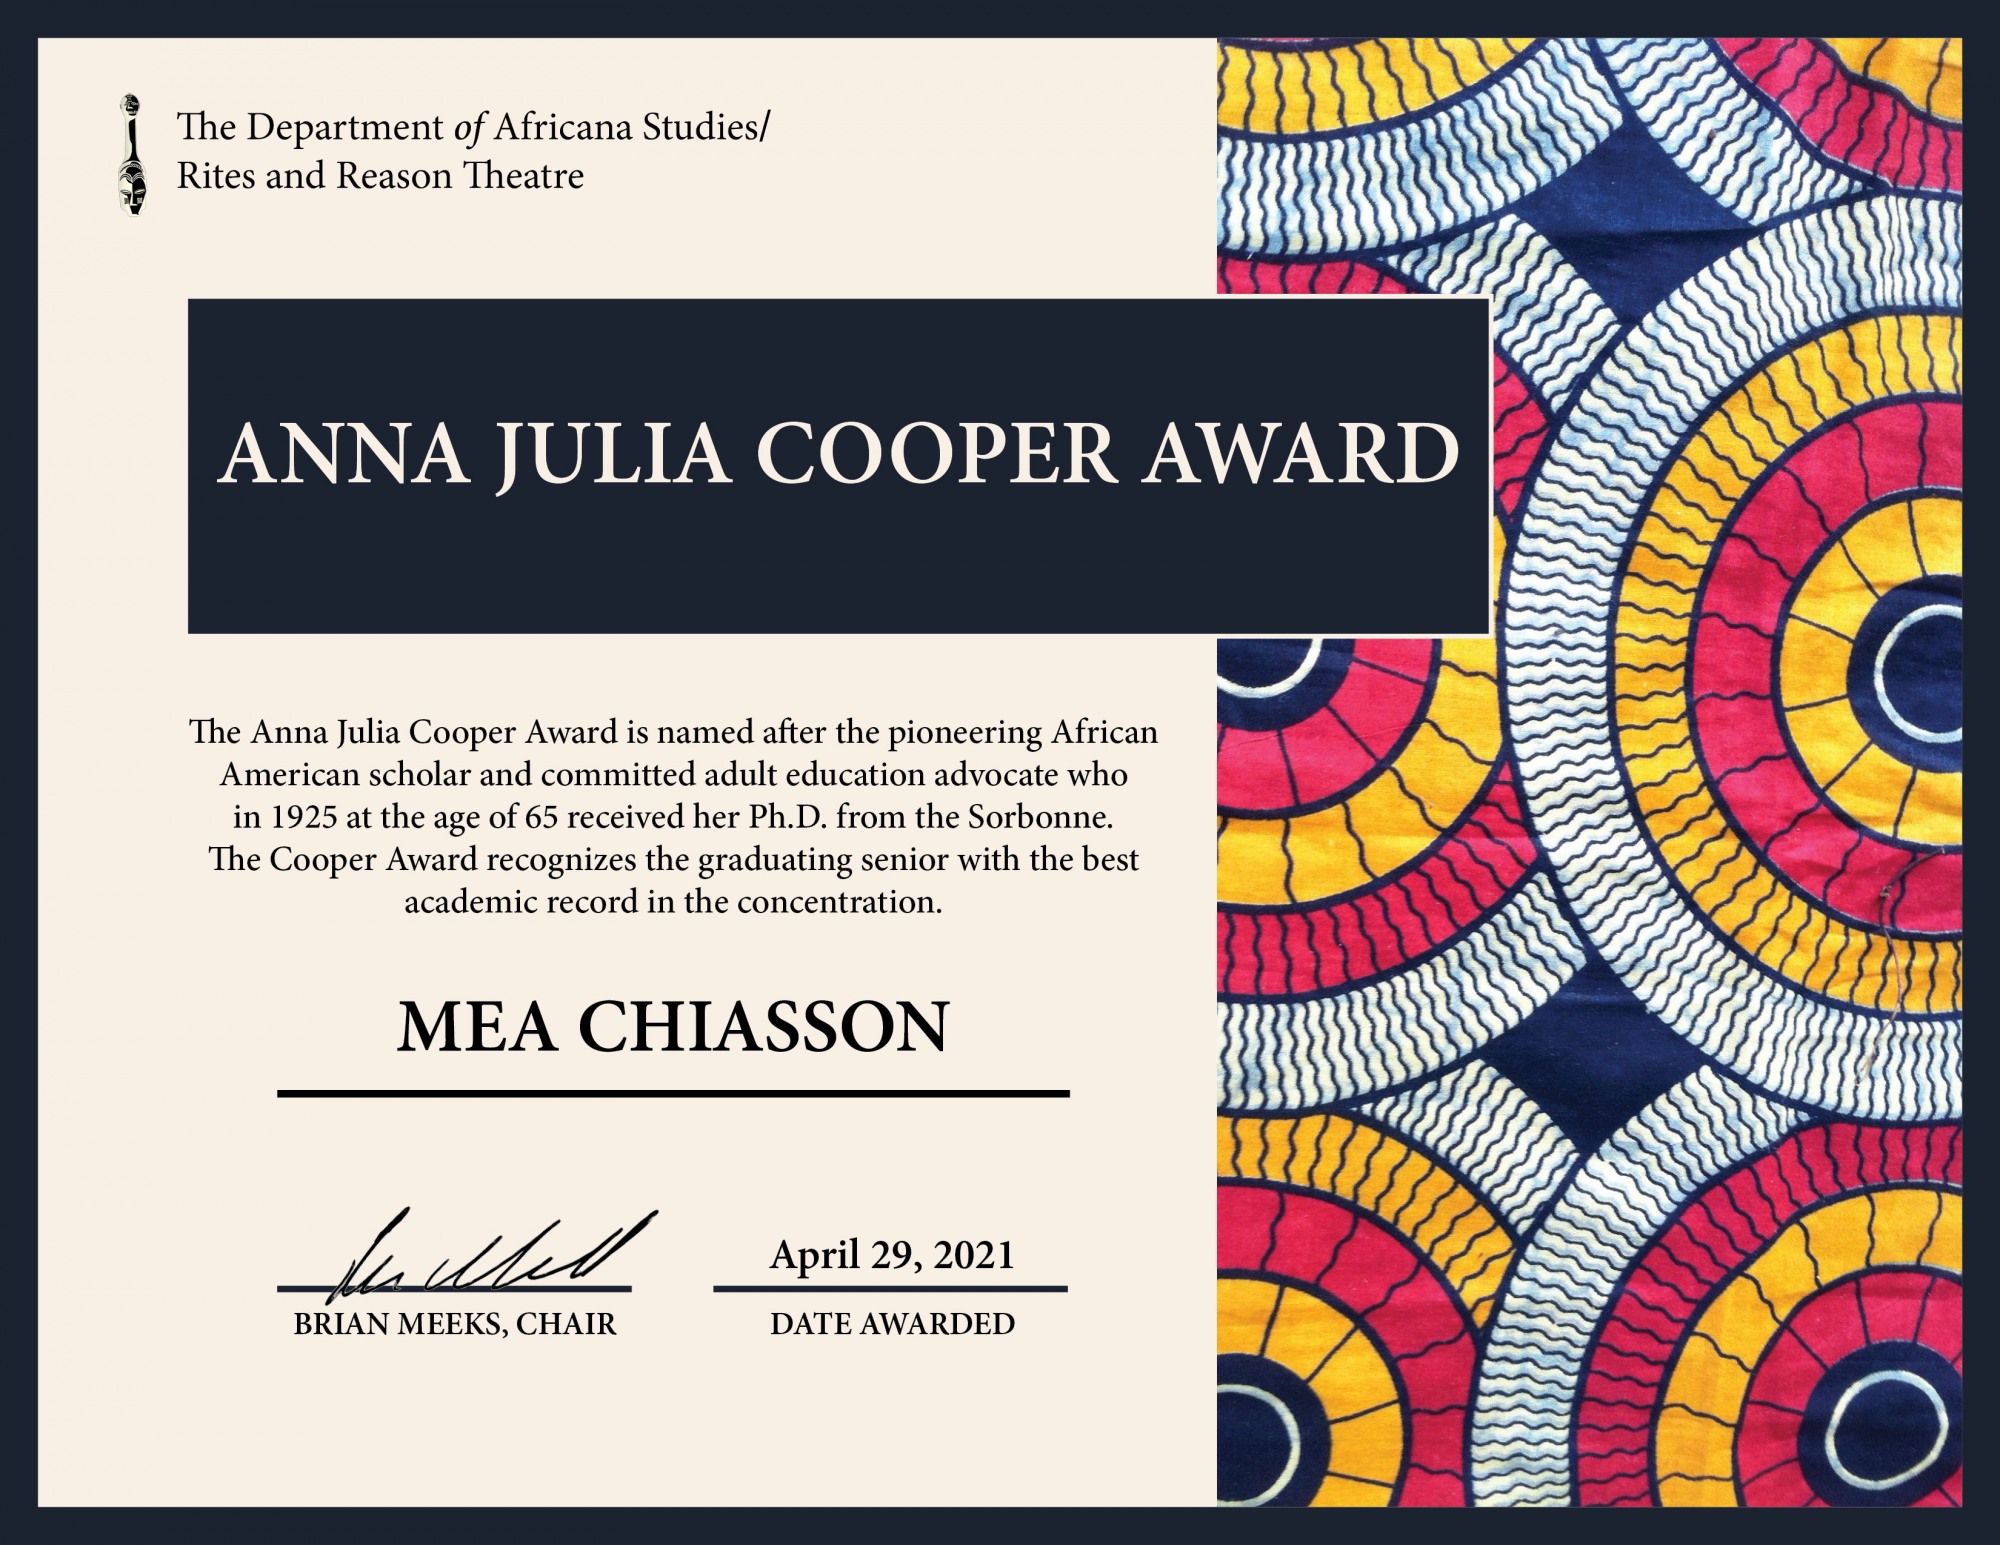 Anna Julia Cooper Award, Mea Chiasson